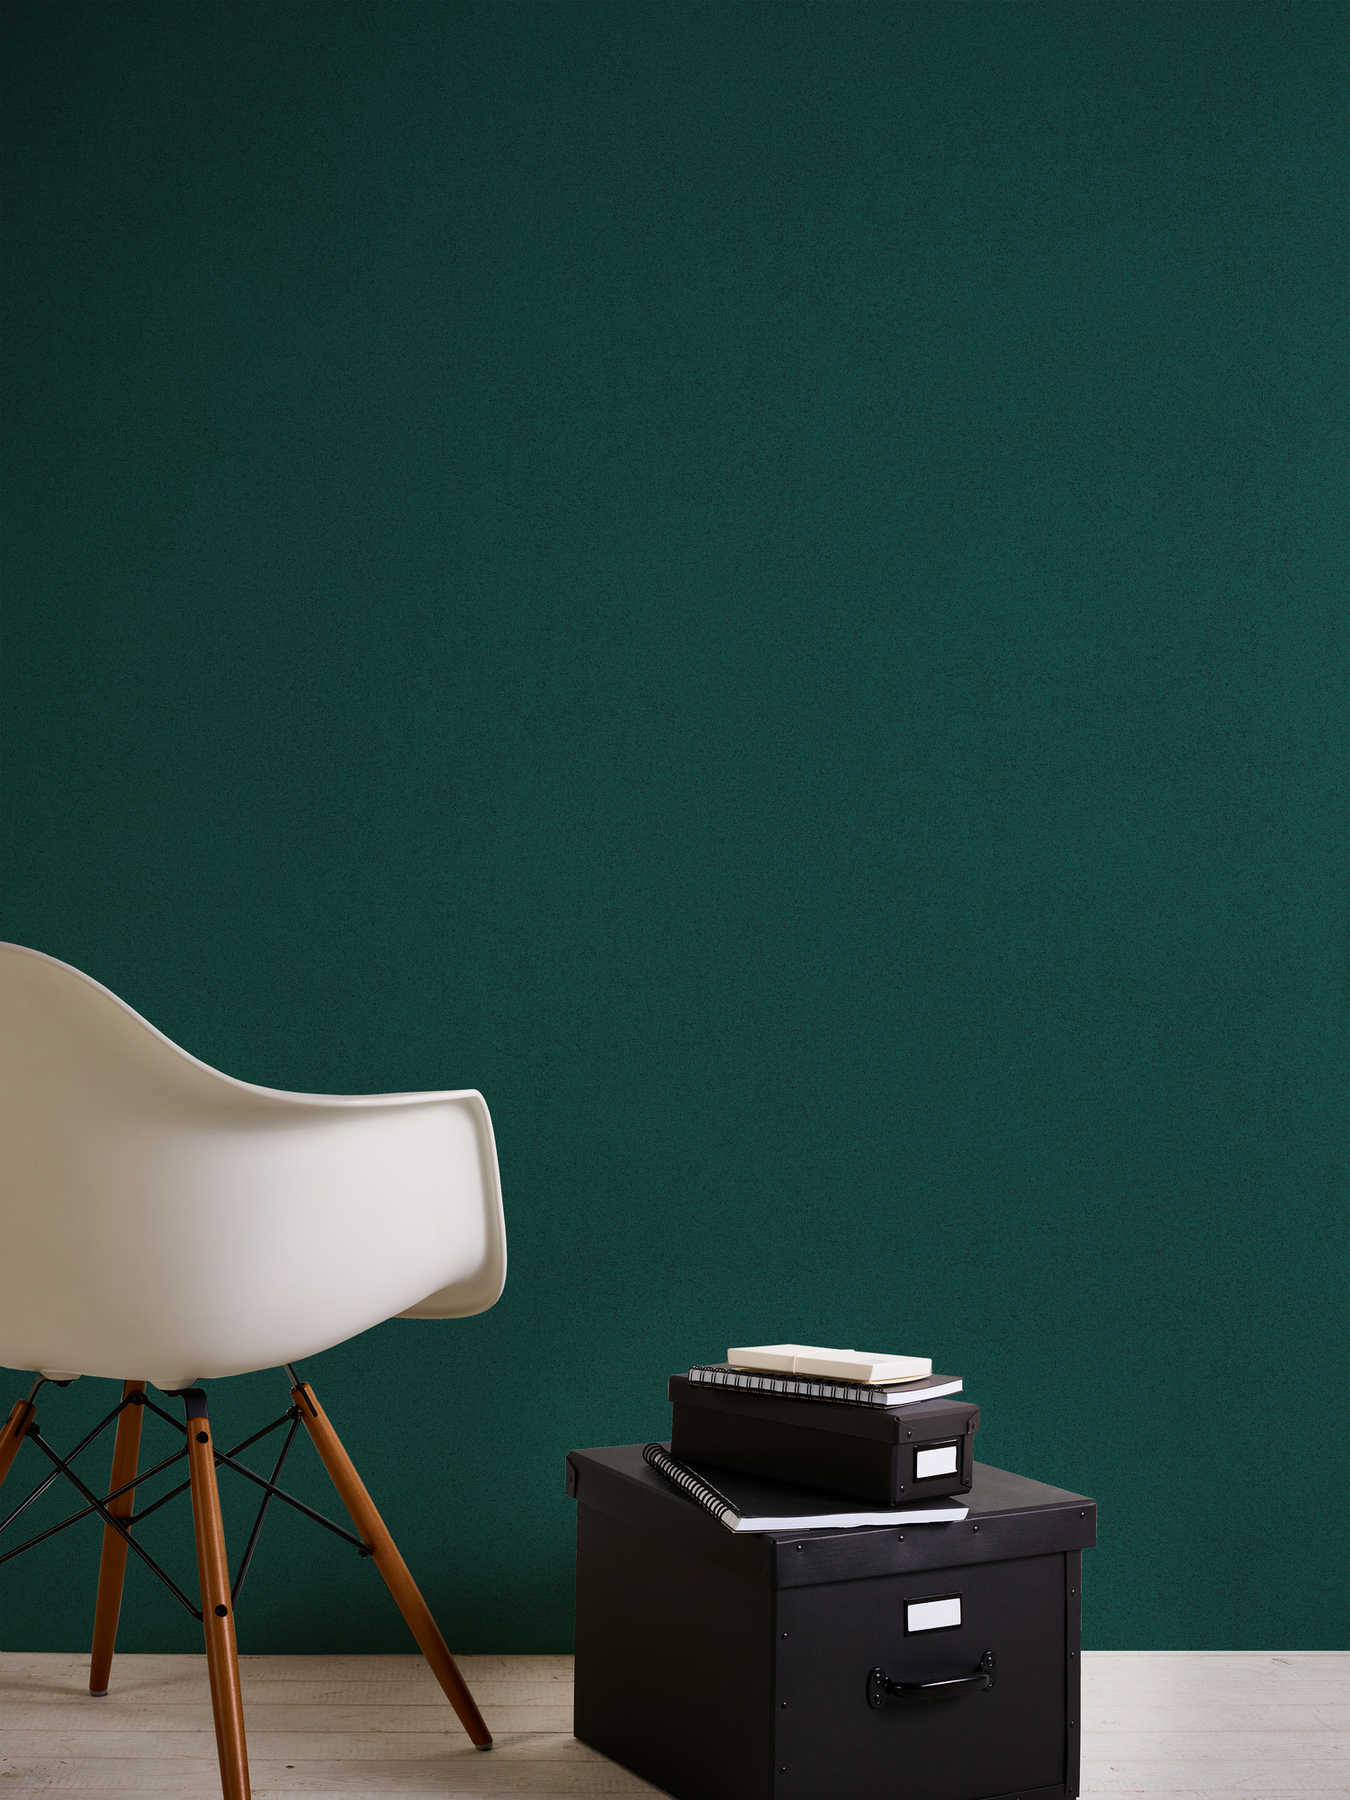             Plain textured wallpaper with linen look - green
        